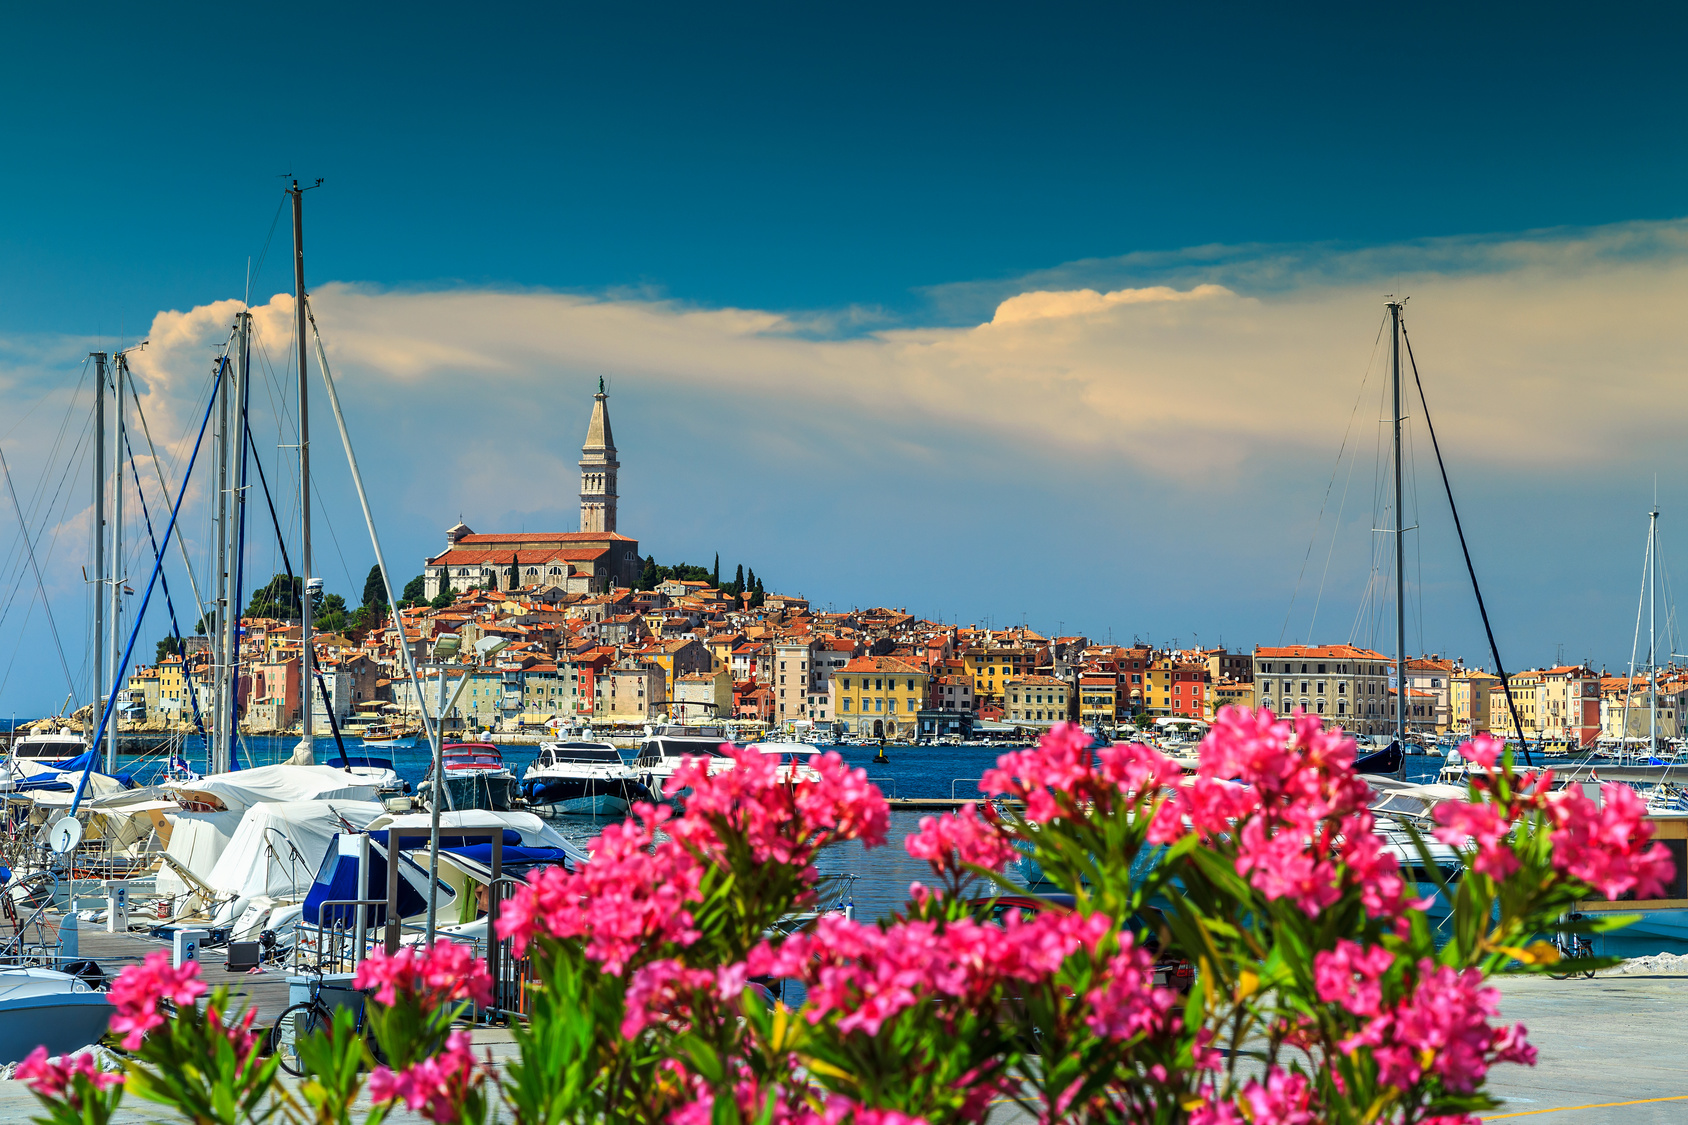 Wonderful romantic old town of Rovinj with beautiful pink oleander flowers,Istrian Peninsula,Croatia,Europe